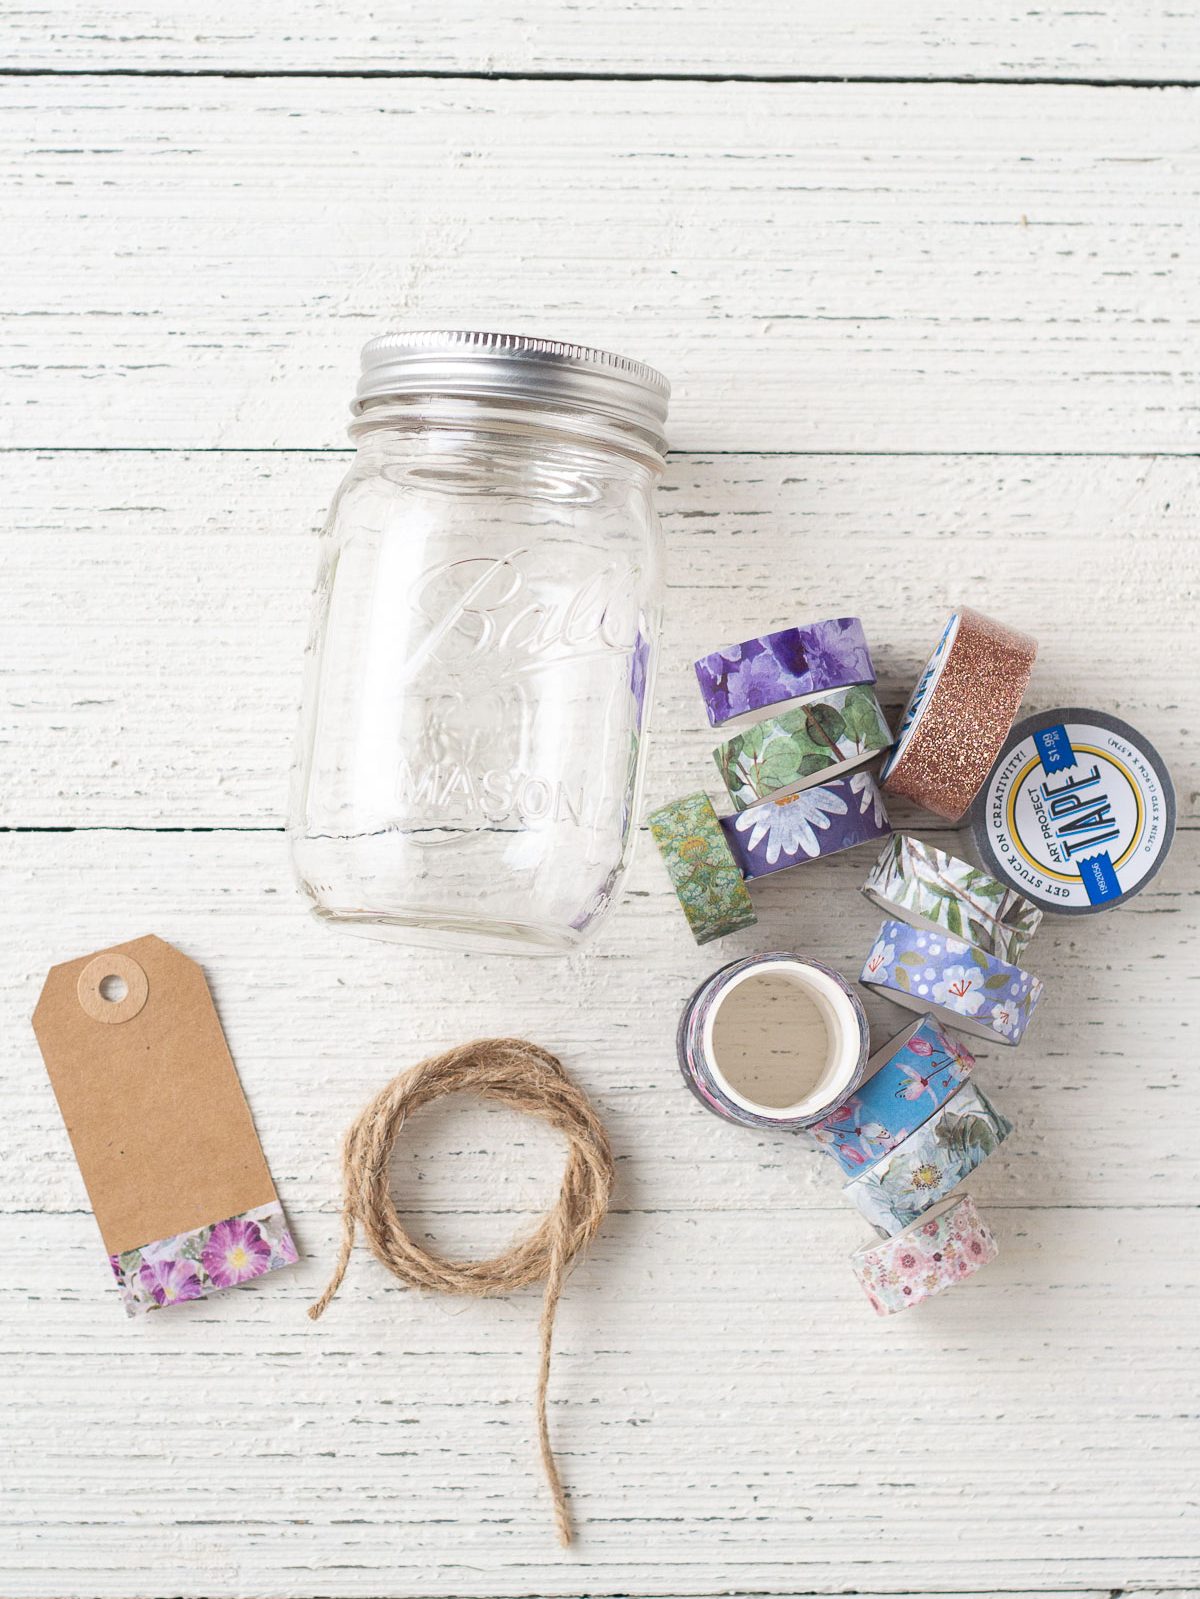 A mason jar, gift tag, twine, and washi tape.